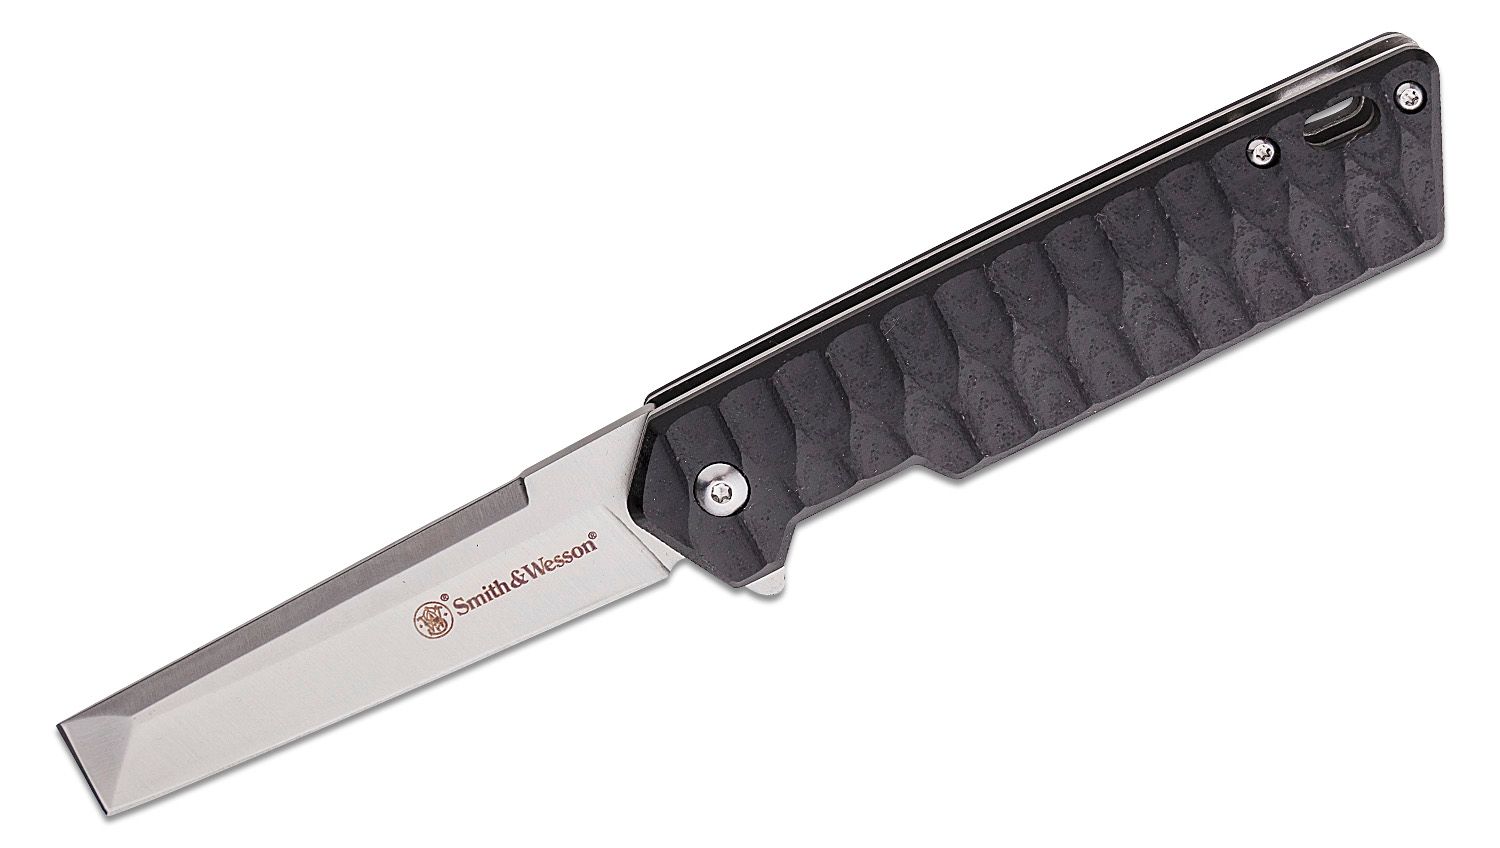 Wayfair, Knife Sets Including Cleaver Knife, From $25 Until 11/20